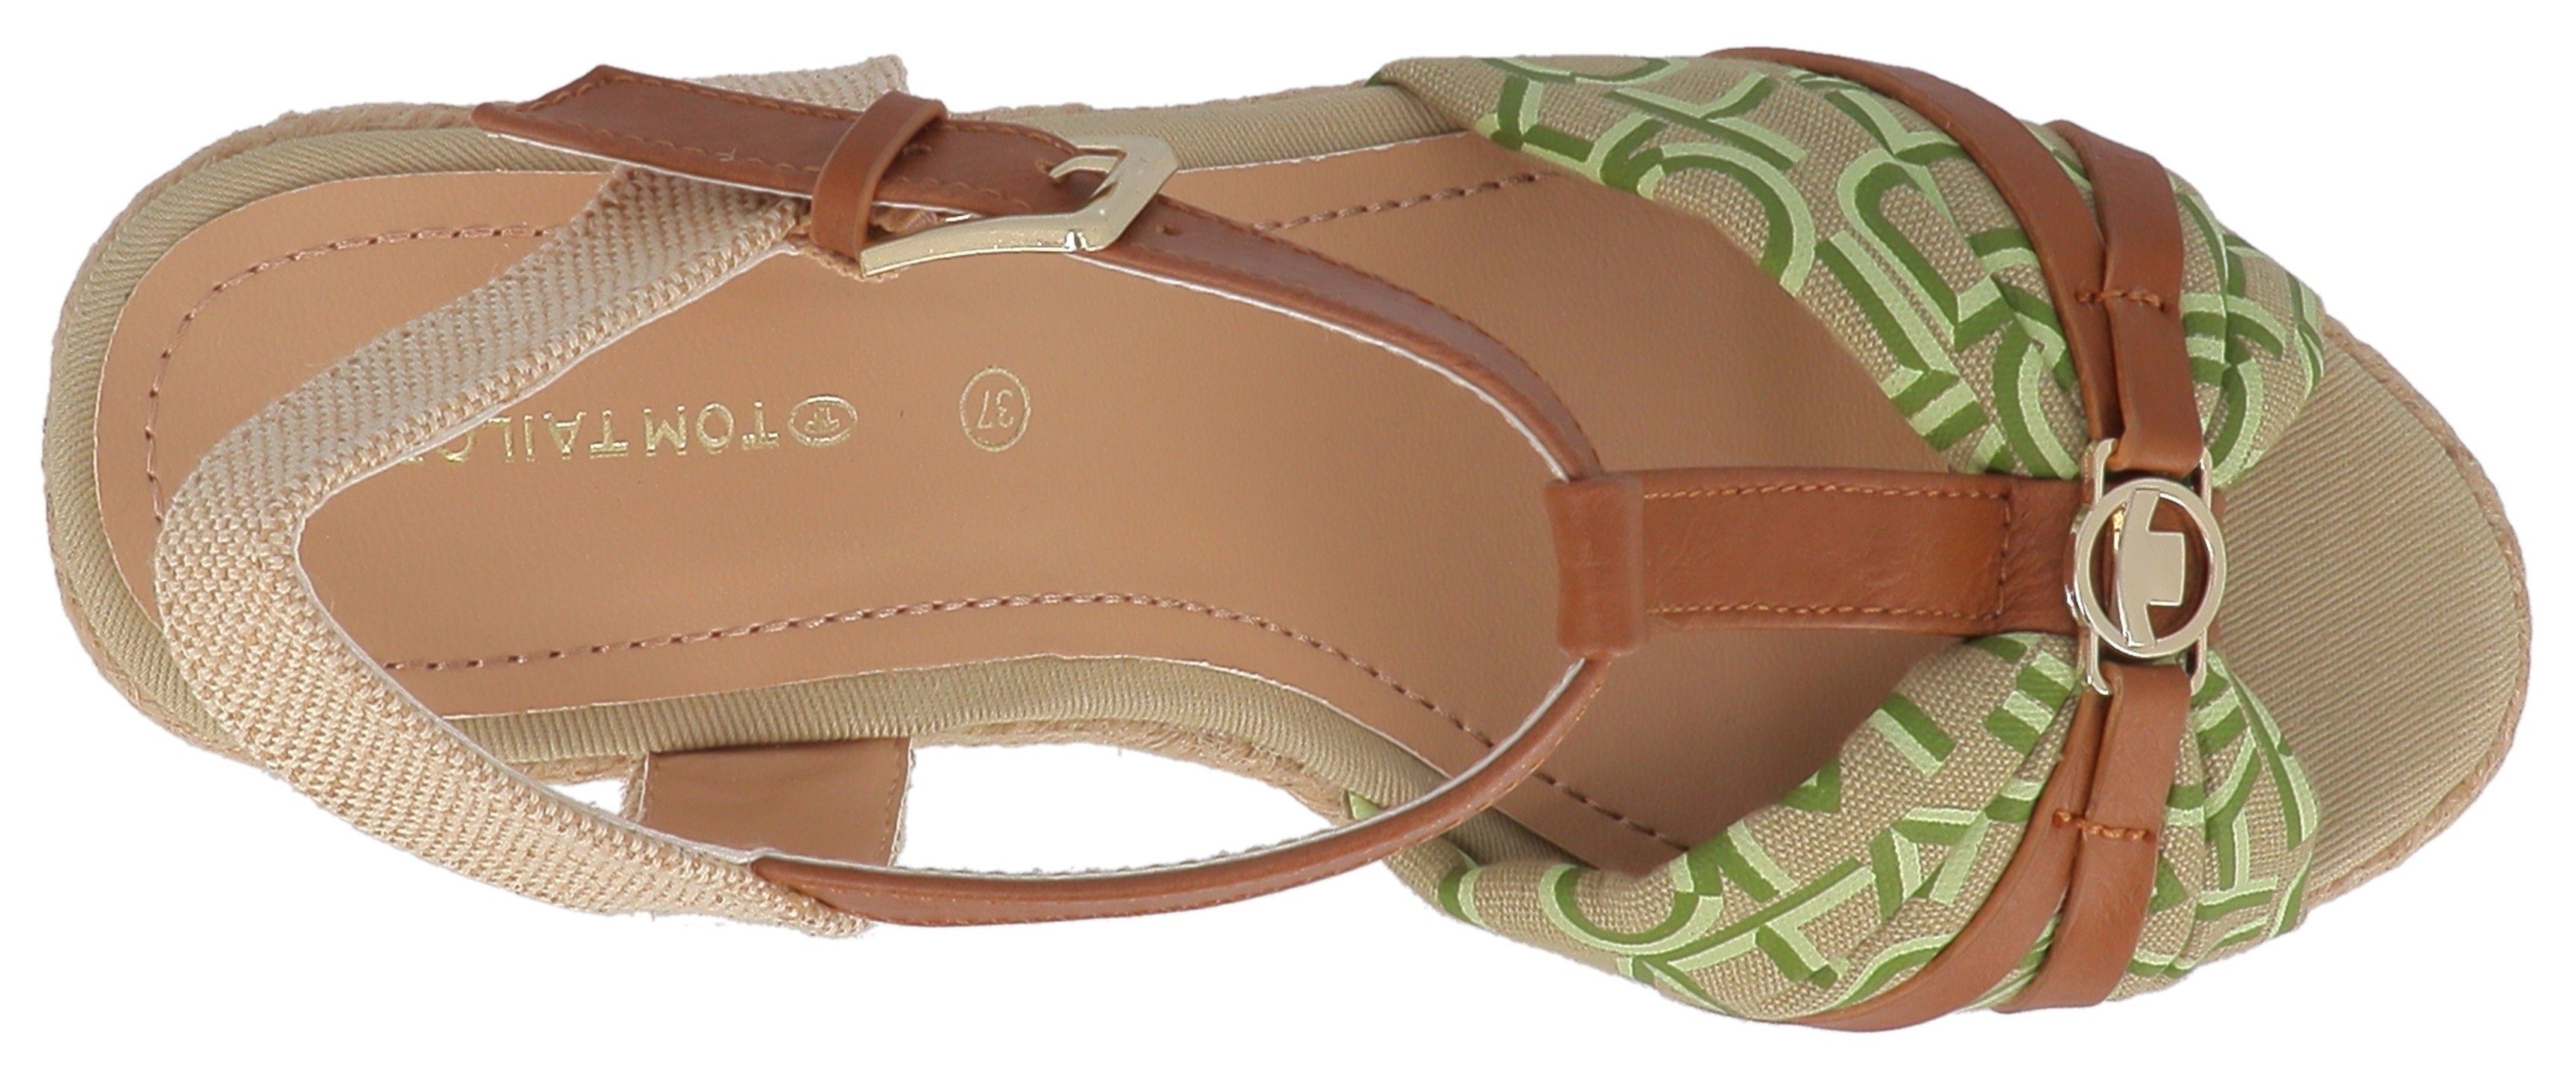 High-Heel-Sandalette TOM mit TAILOR logobedruckter Bandage braun-grün